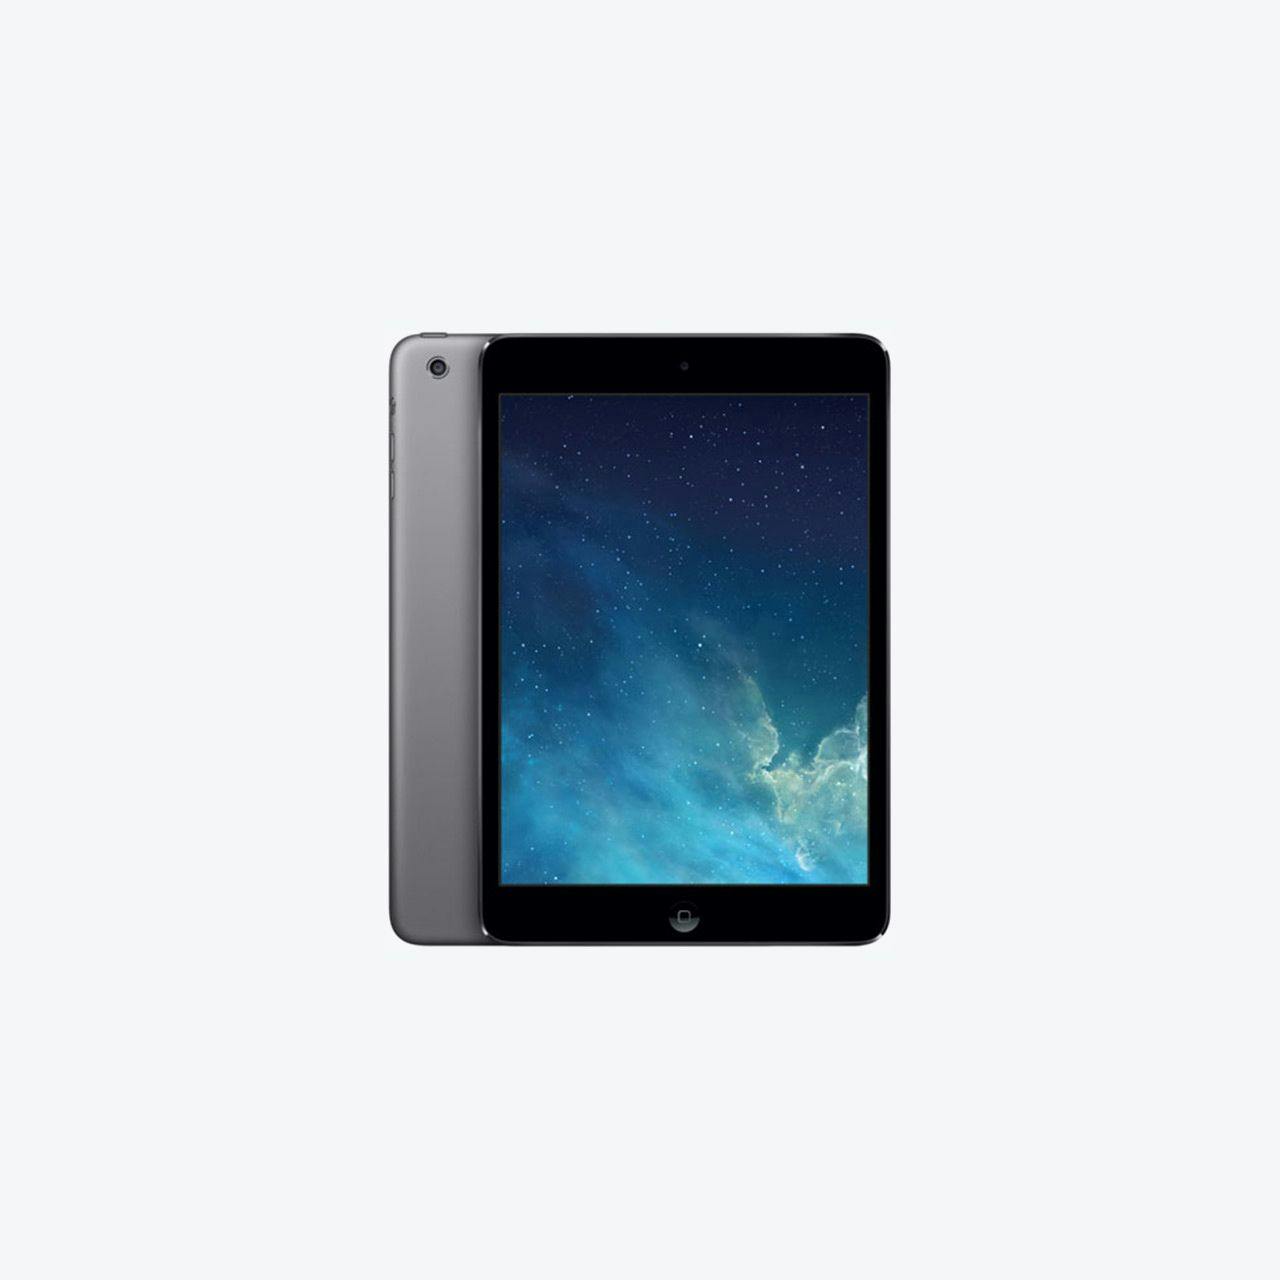 Image of iPad mini 2.